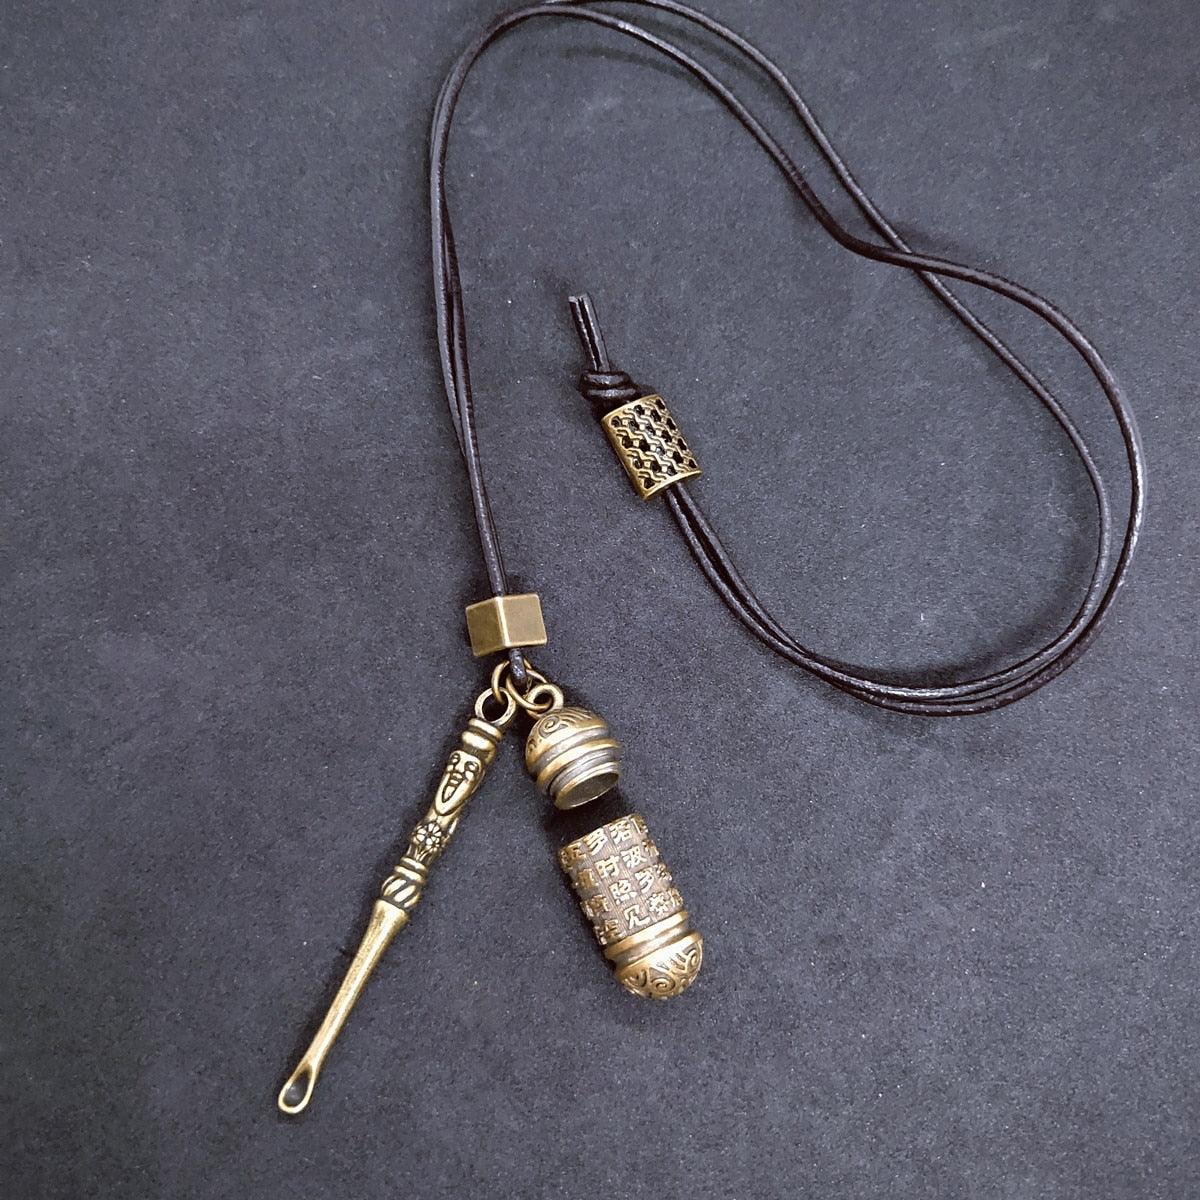 Mini Spoon with Brass Jar Pendants Necklaces - The Burner Shop